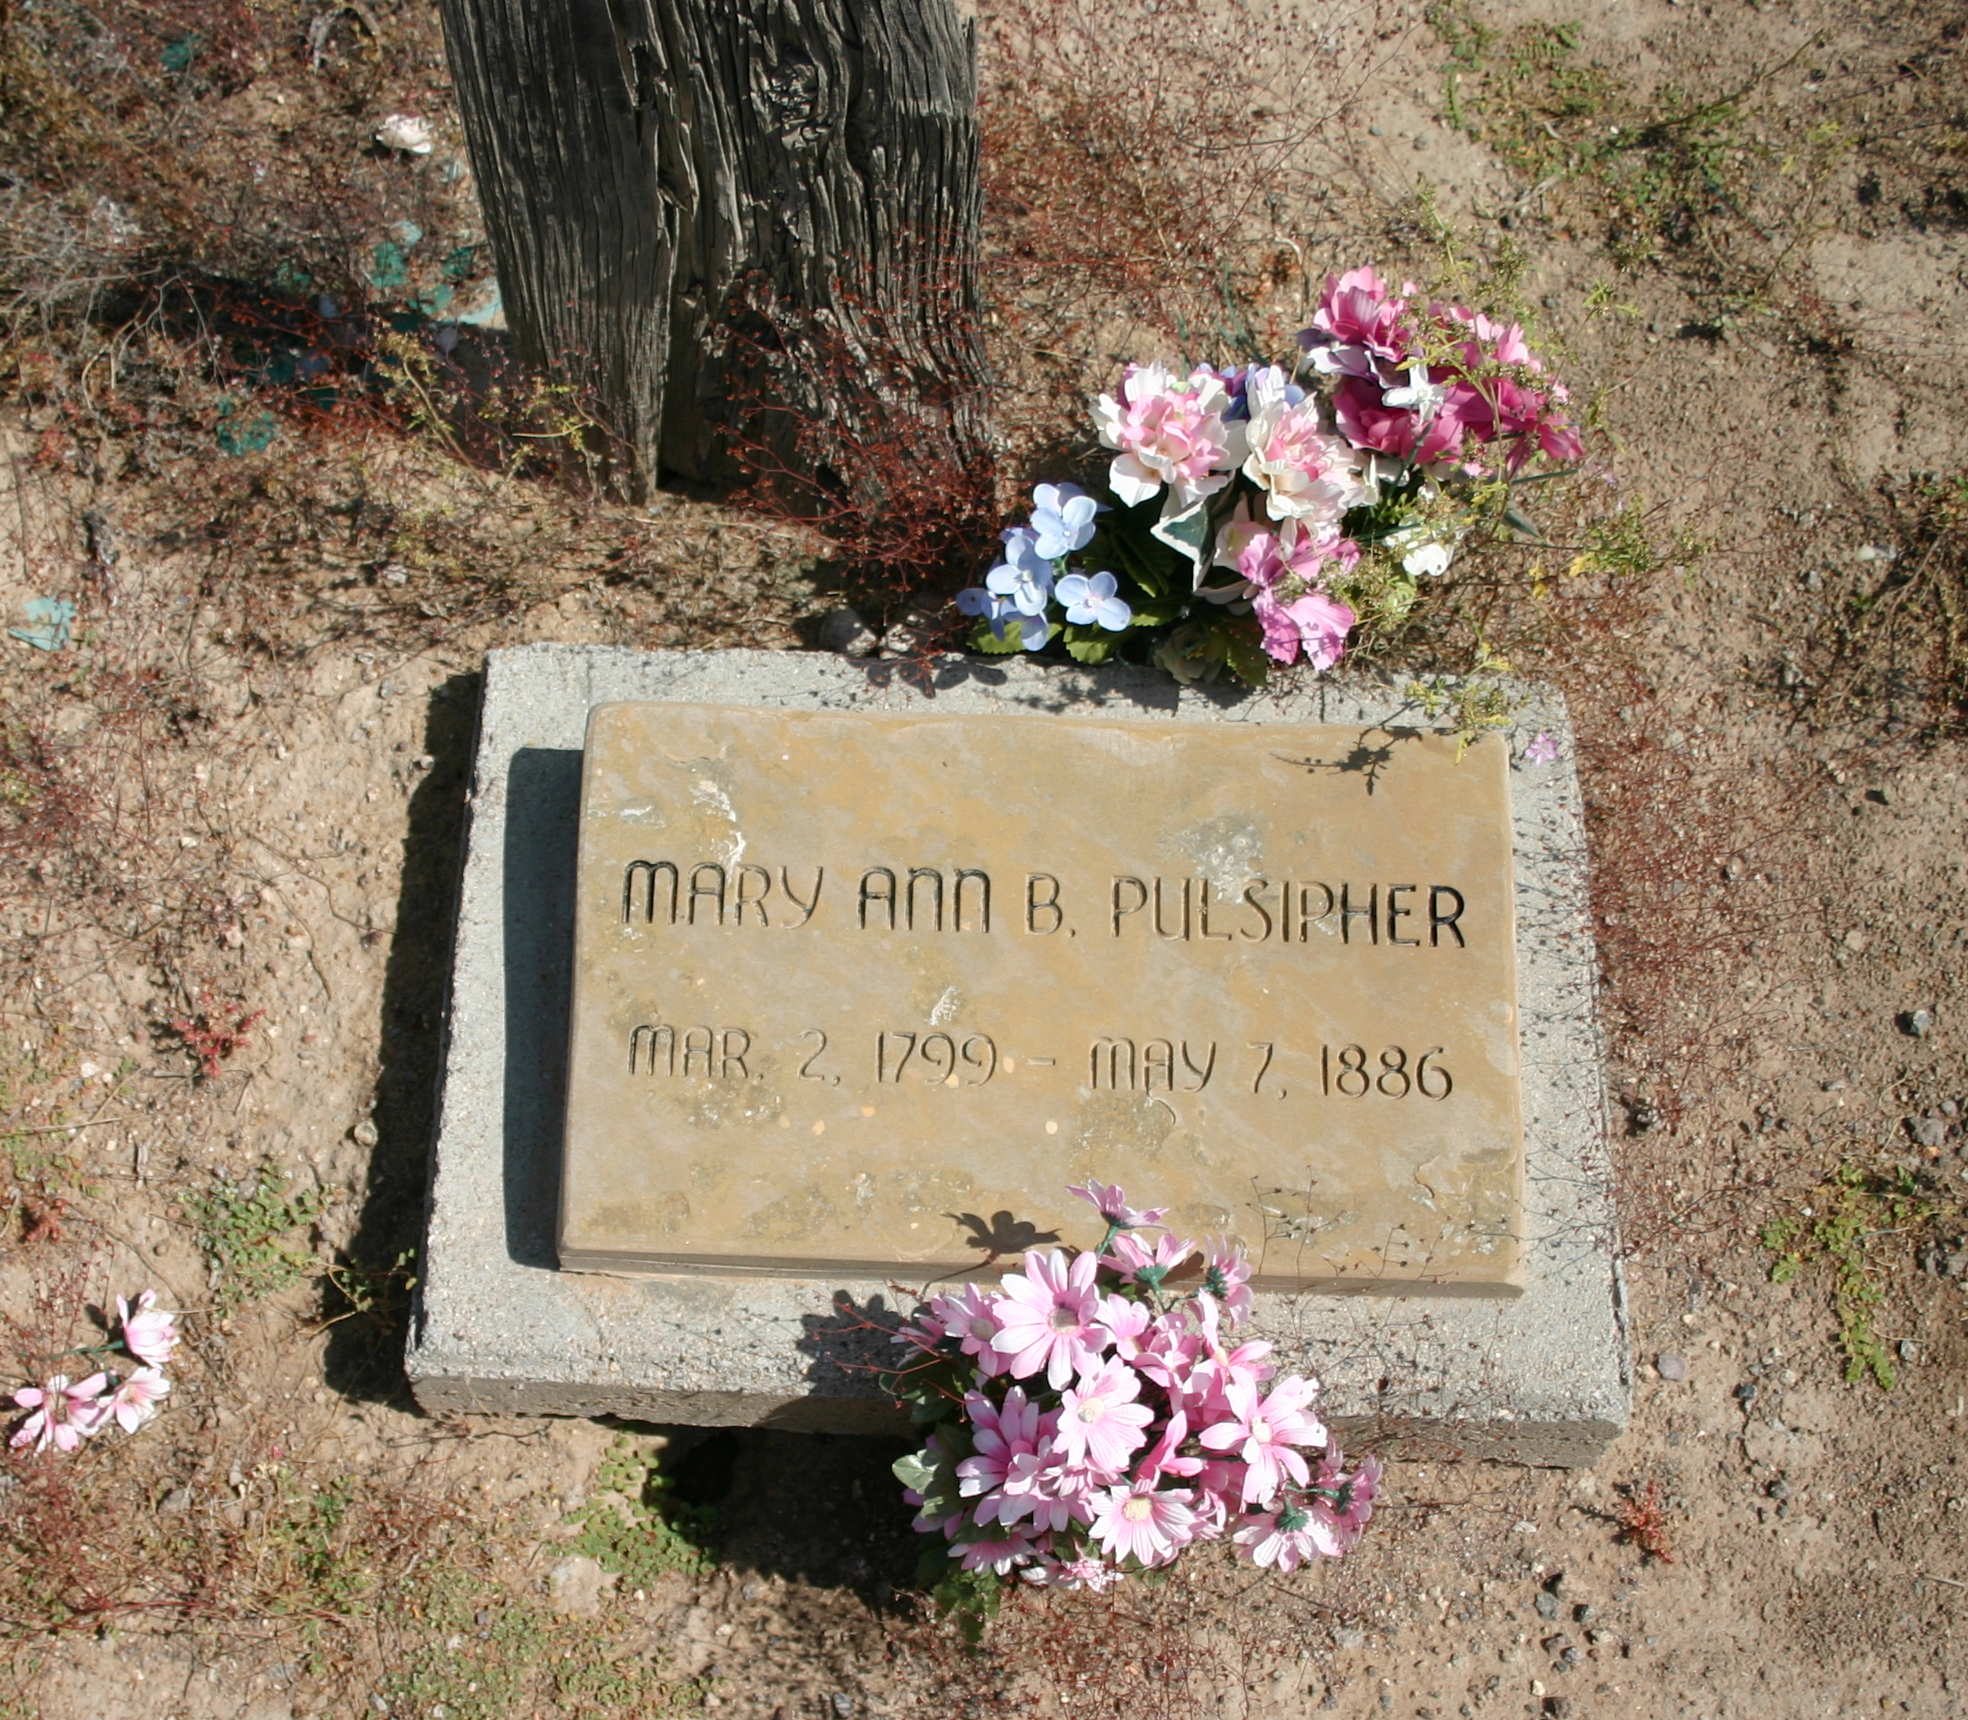 Mary Ann B. Pulsipher gravestone at the Hebron Cemetery